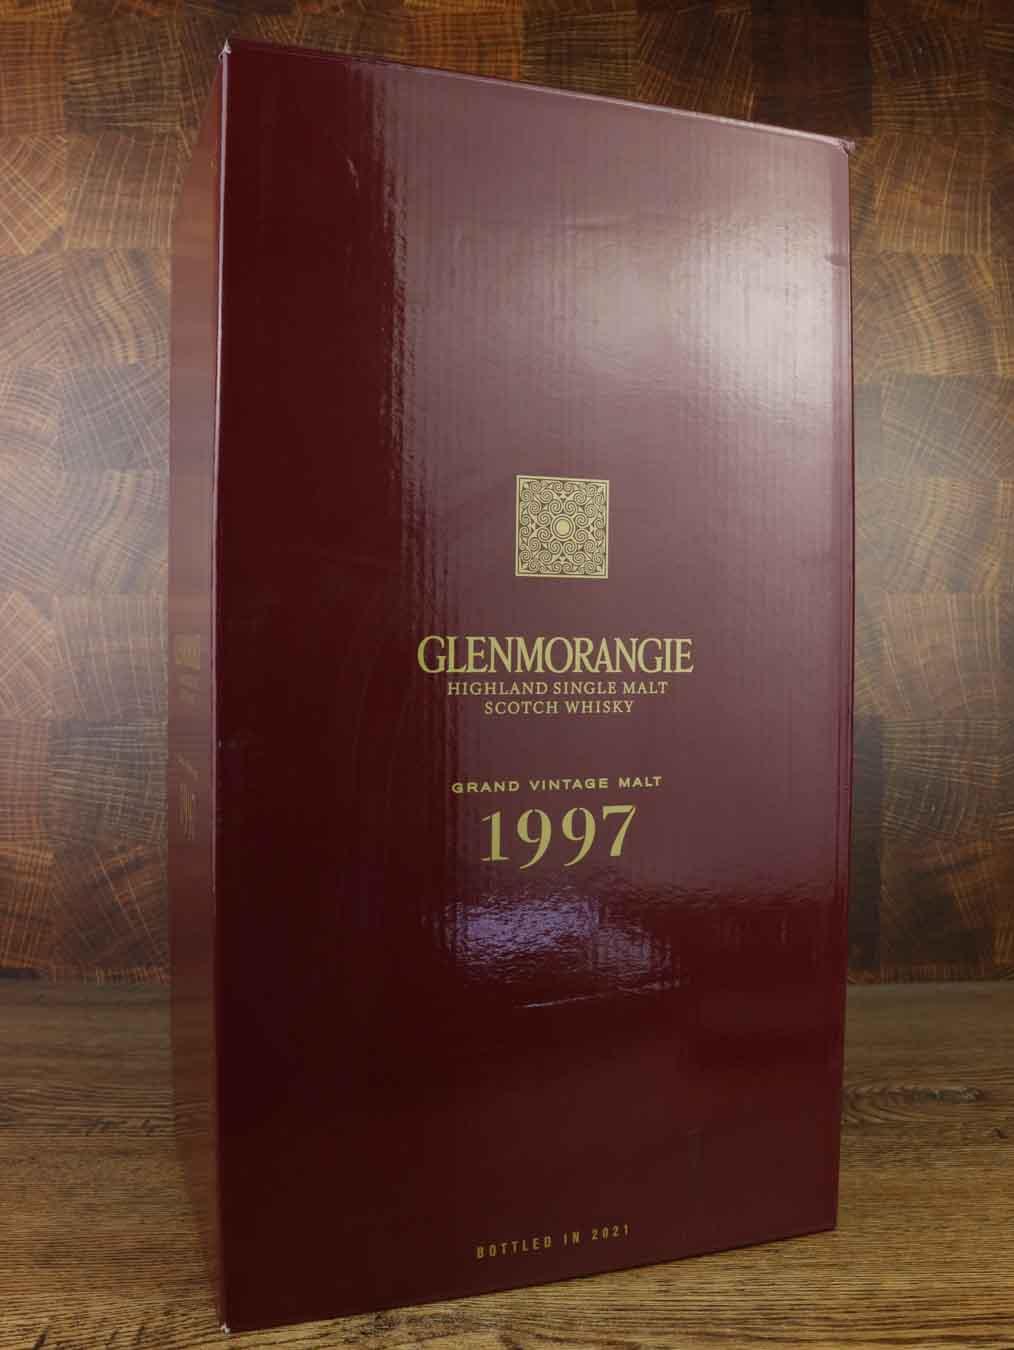 Glenmorangie Grand Vintage Malt 1997 Highland Single Malt Scotch 750ml